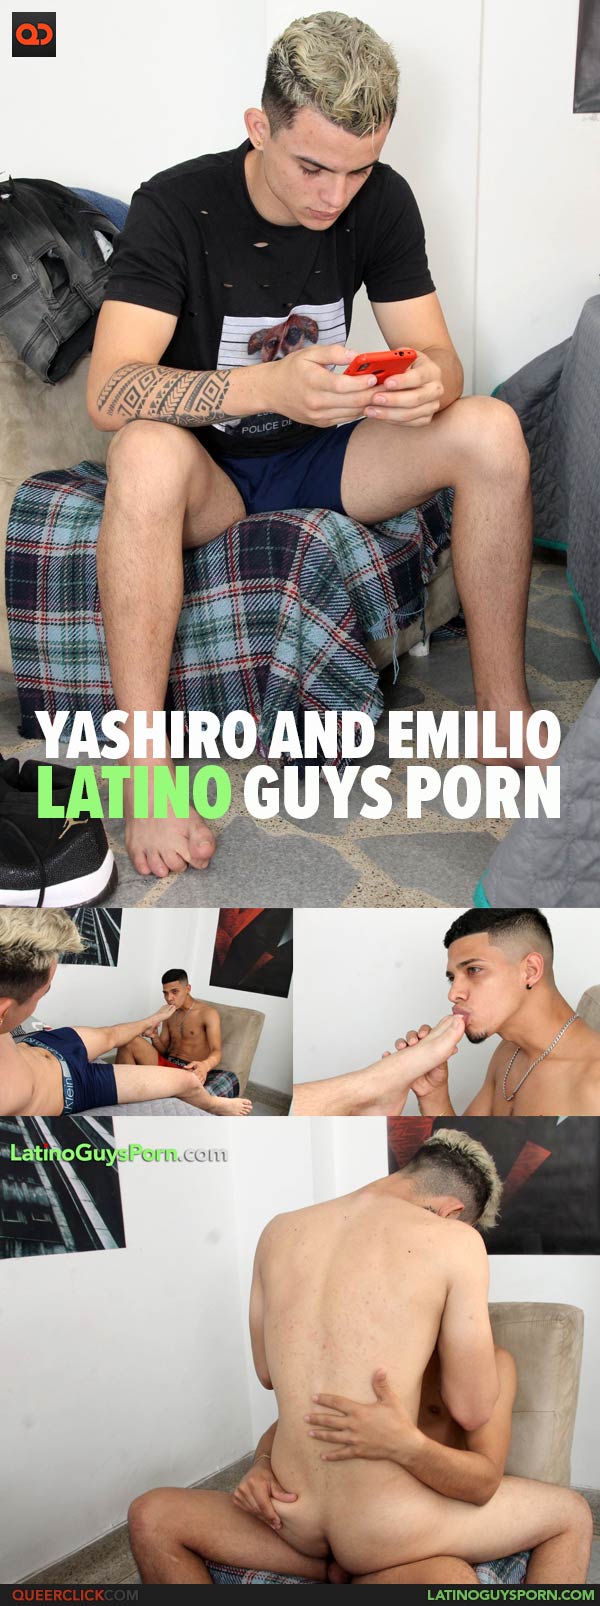 LatinoGuysPorn: Yashiro and Emilio Core